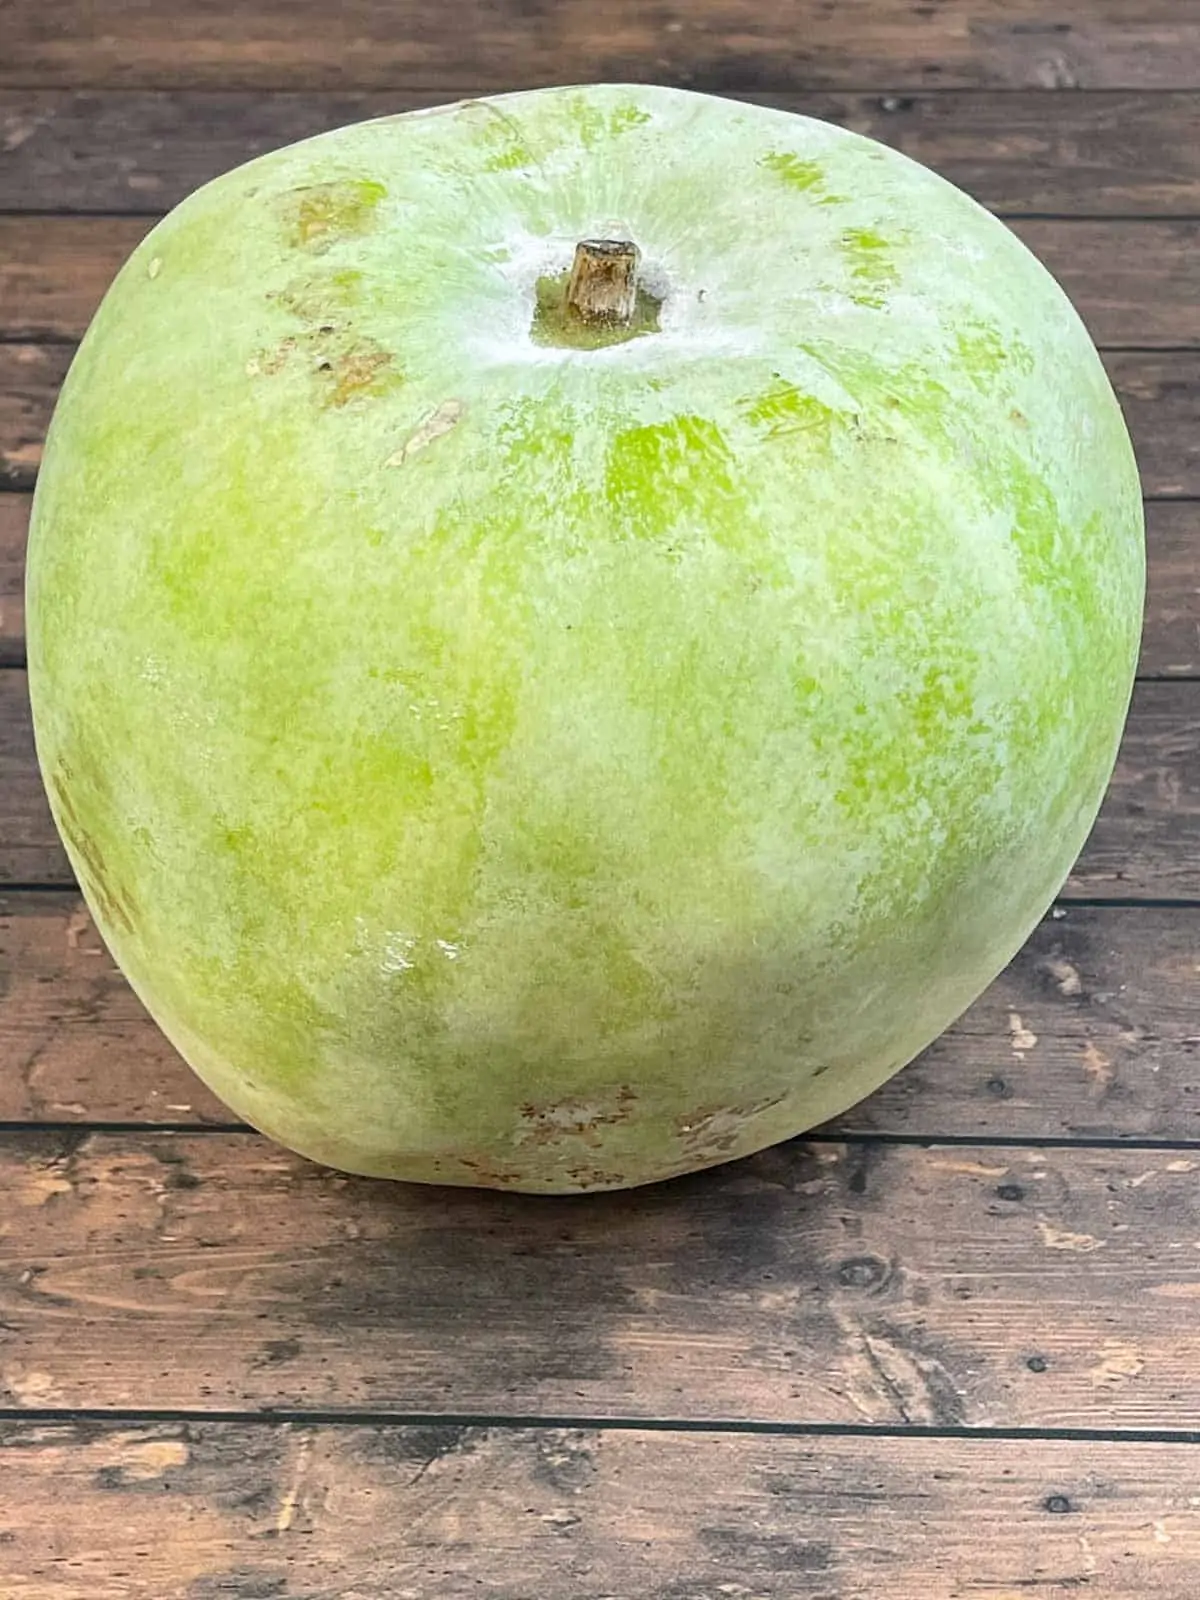 whole ash gourd (winter melon)